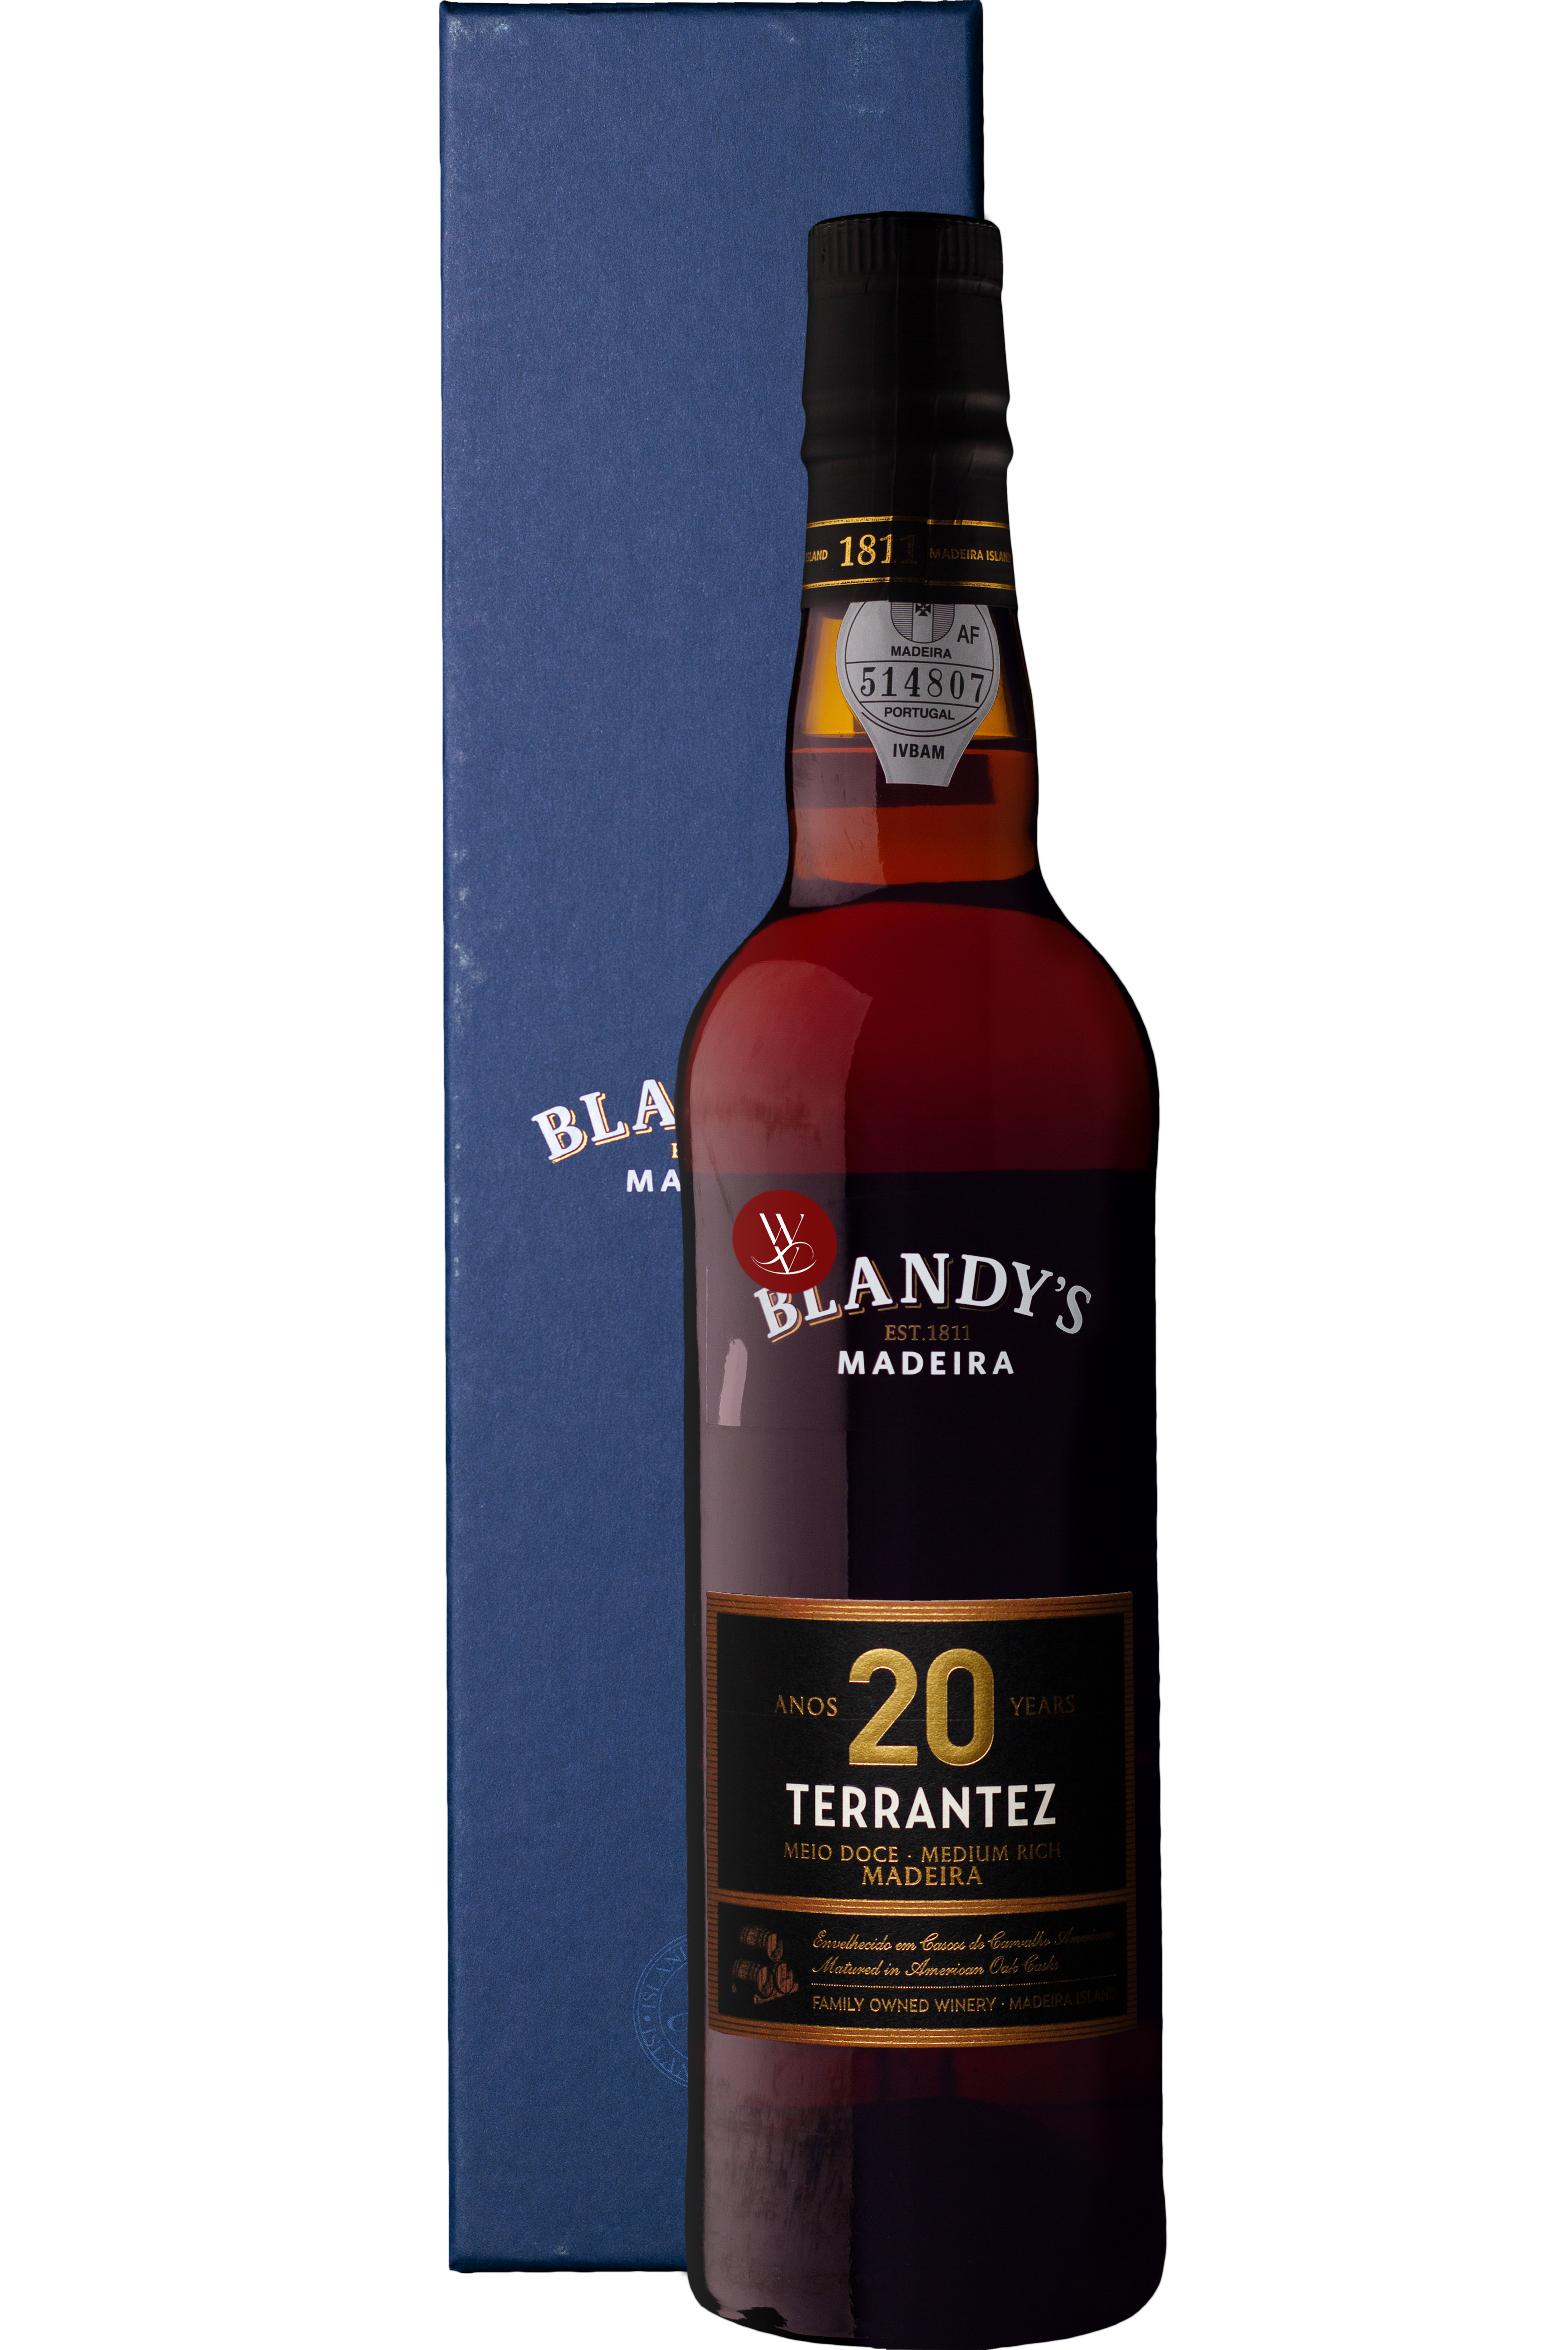 WineVins Blandy's Terrantez 20 Anos